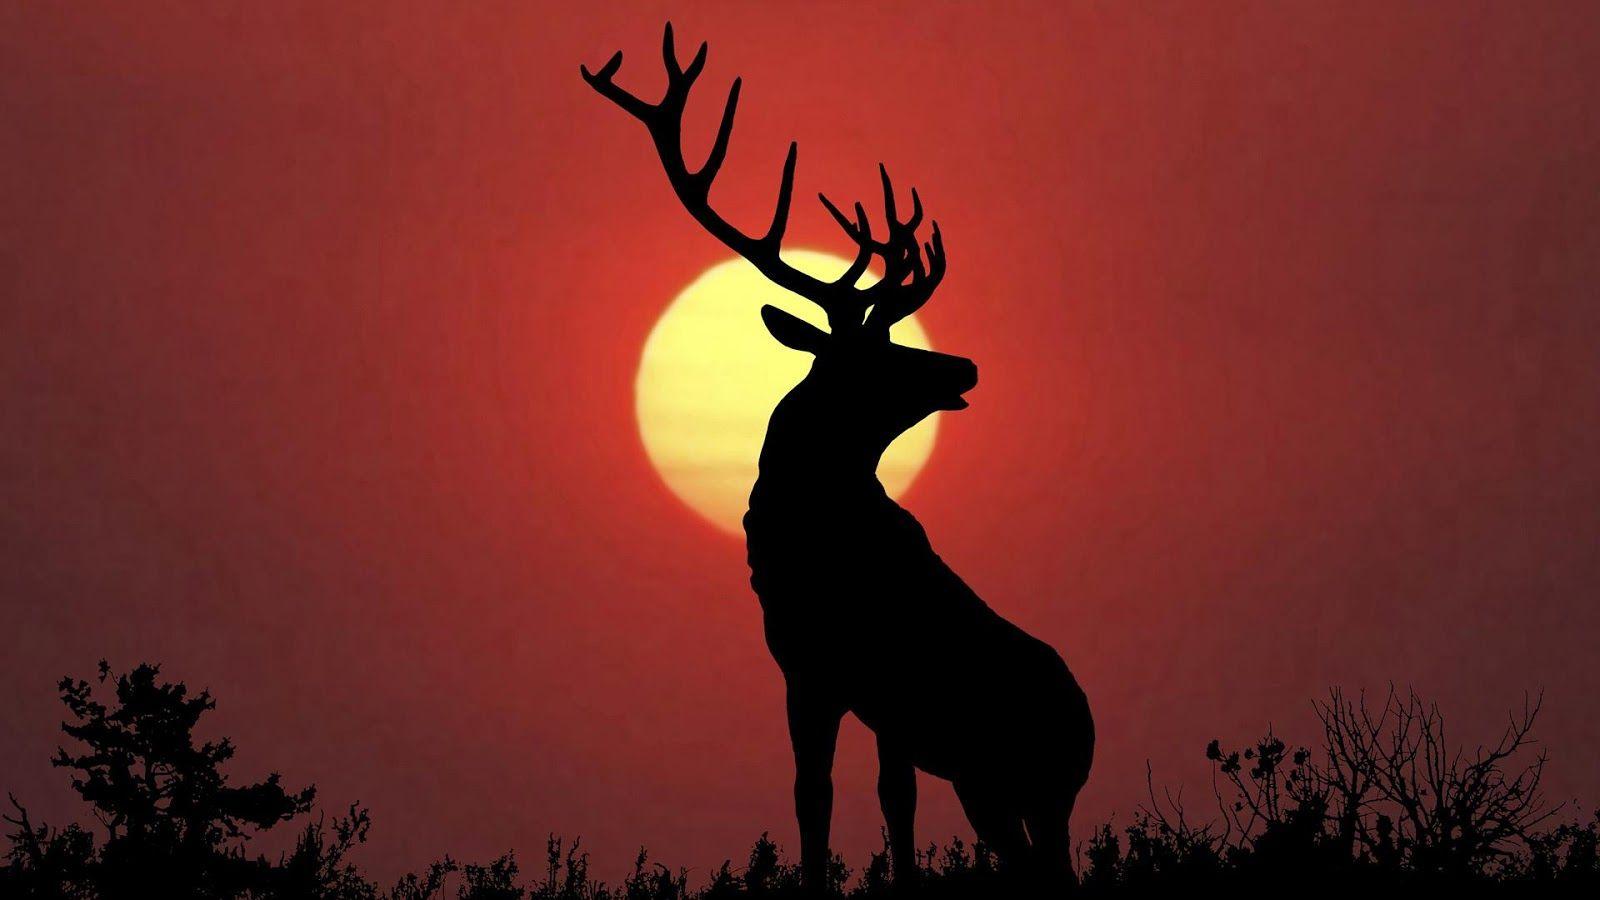 Deer Wallpaper Apps on Google Play. Beautiful